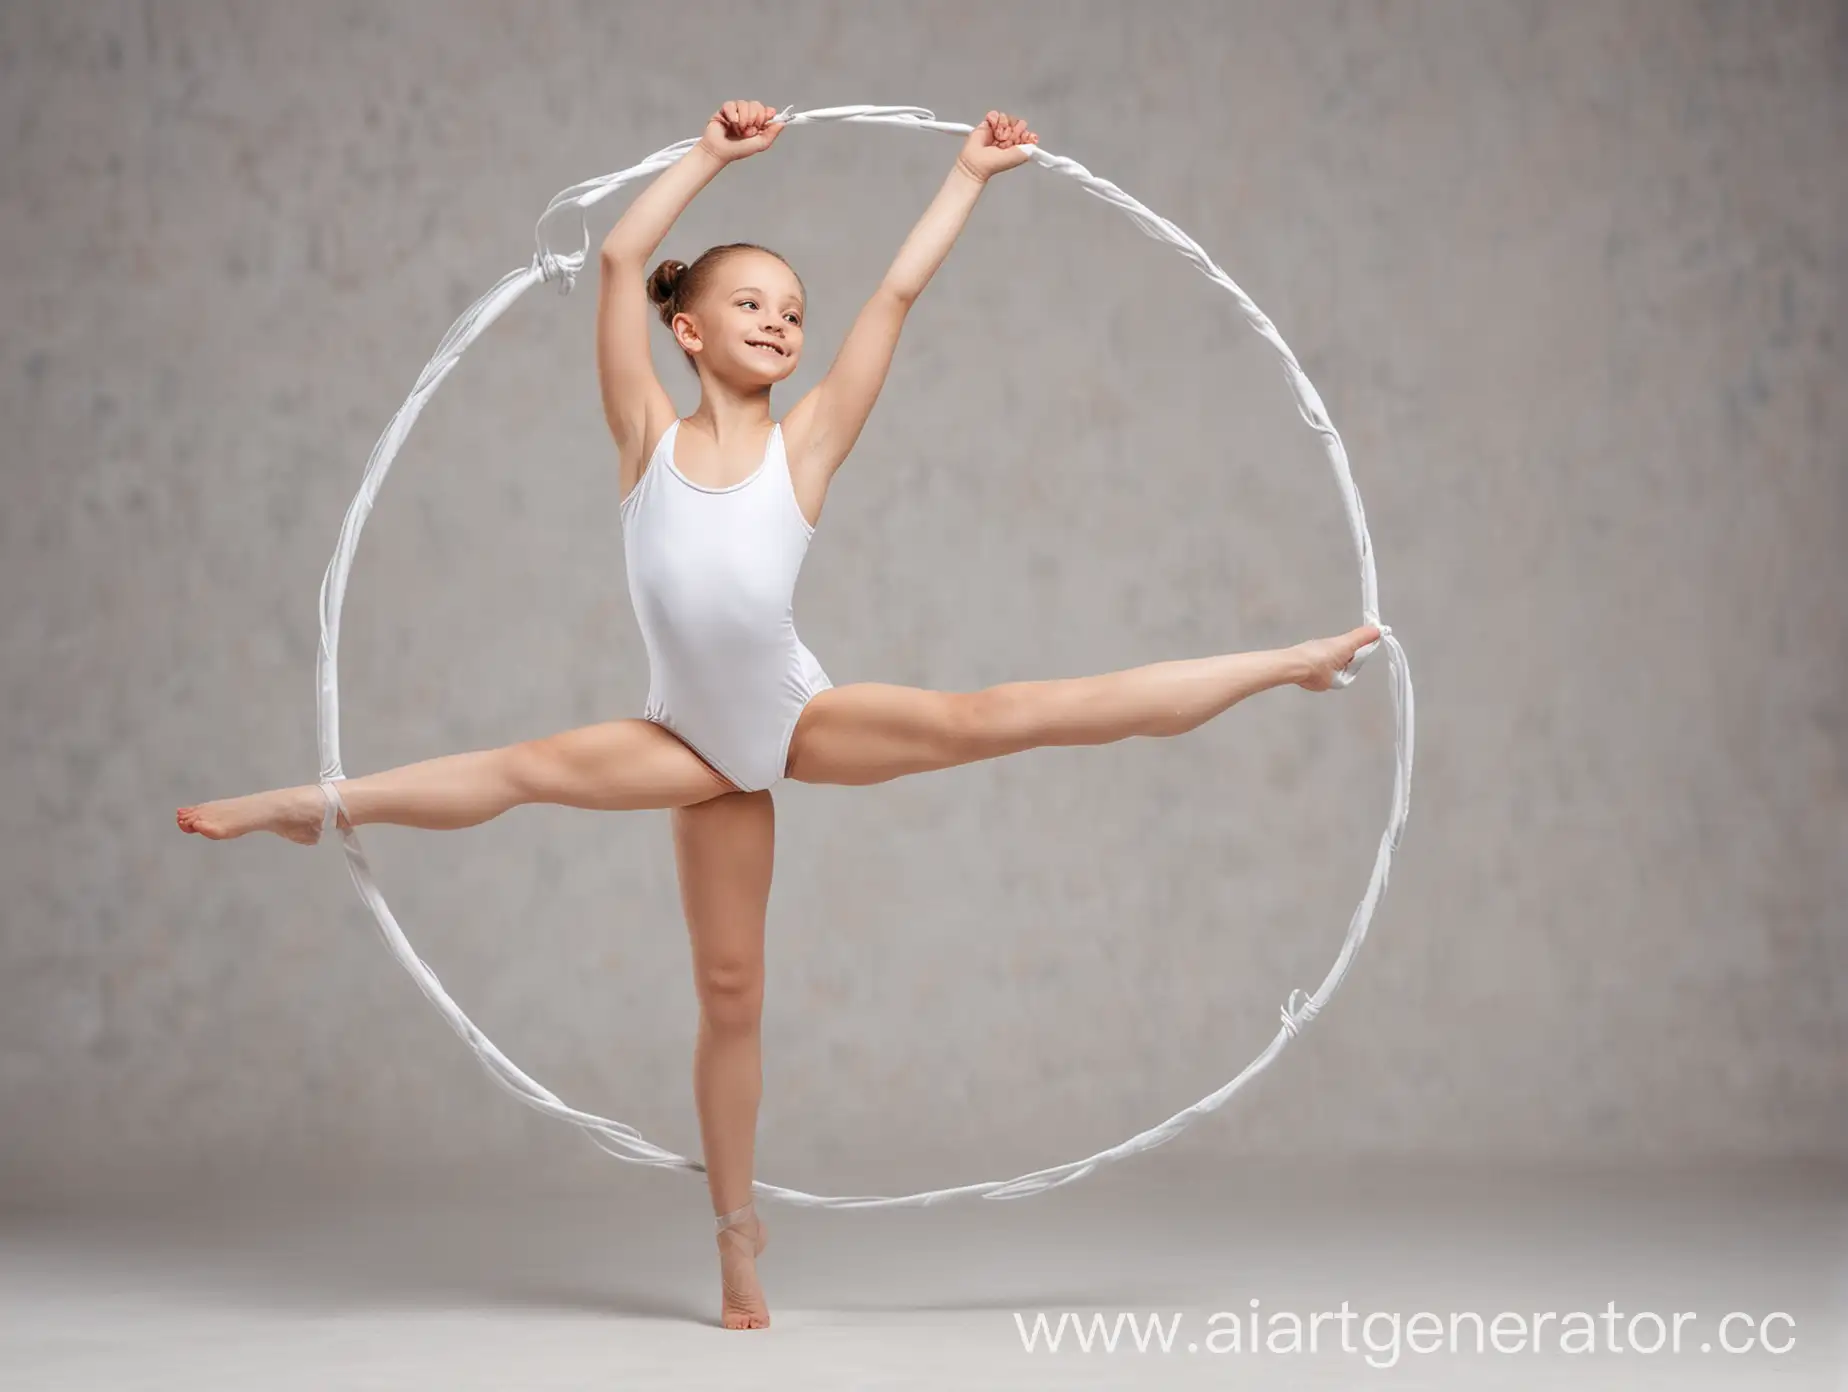 Cheerful-10YearOld-Girl-Gymnast-with-White-Hoop